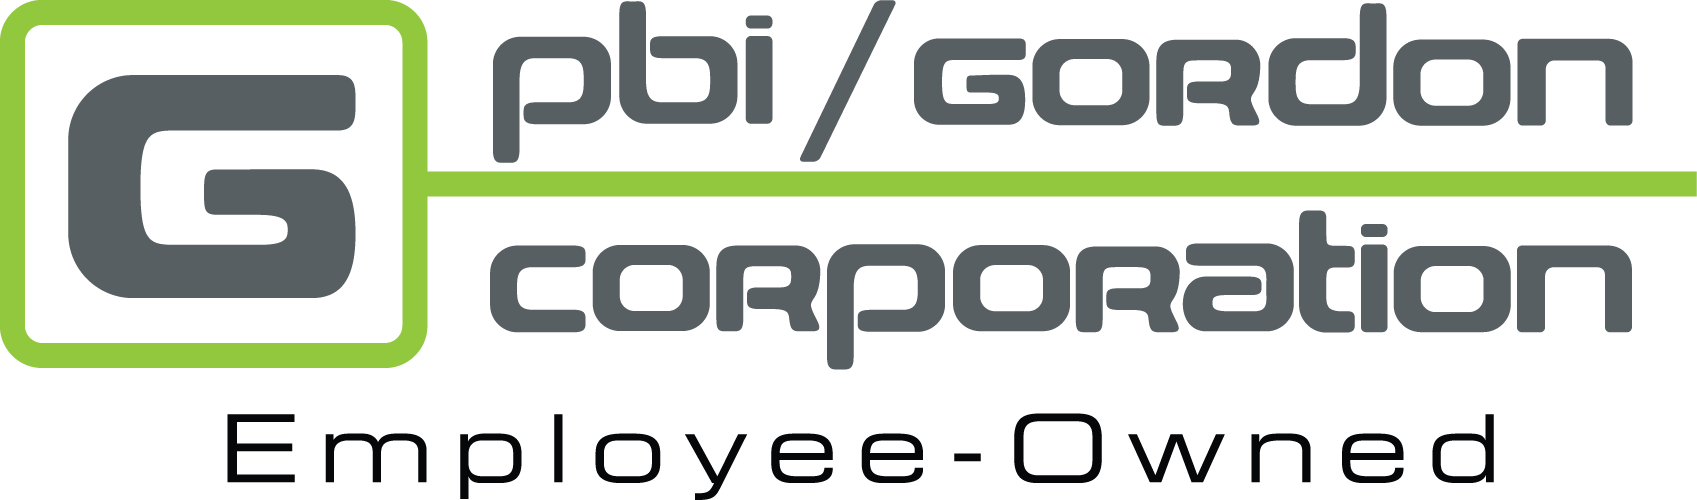 PBI Employee Owned Logo